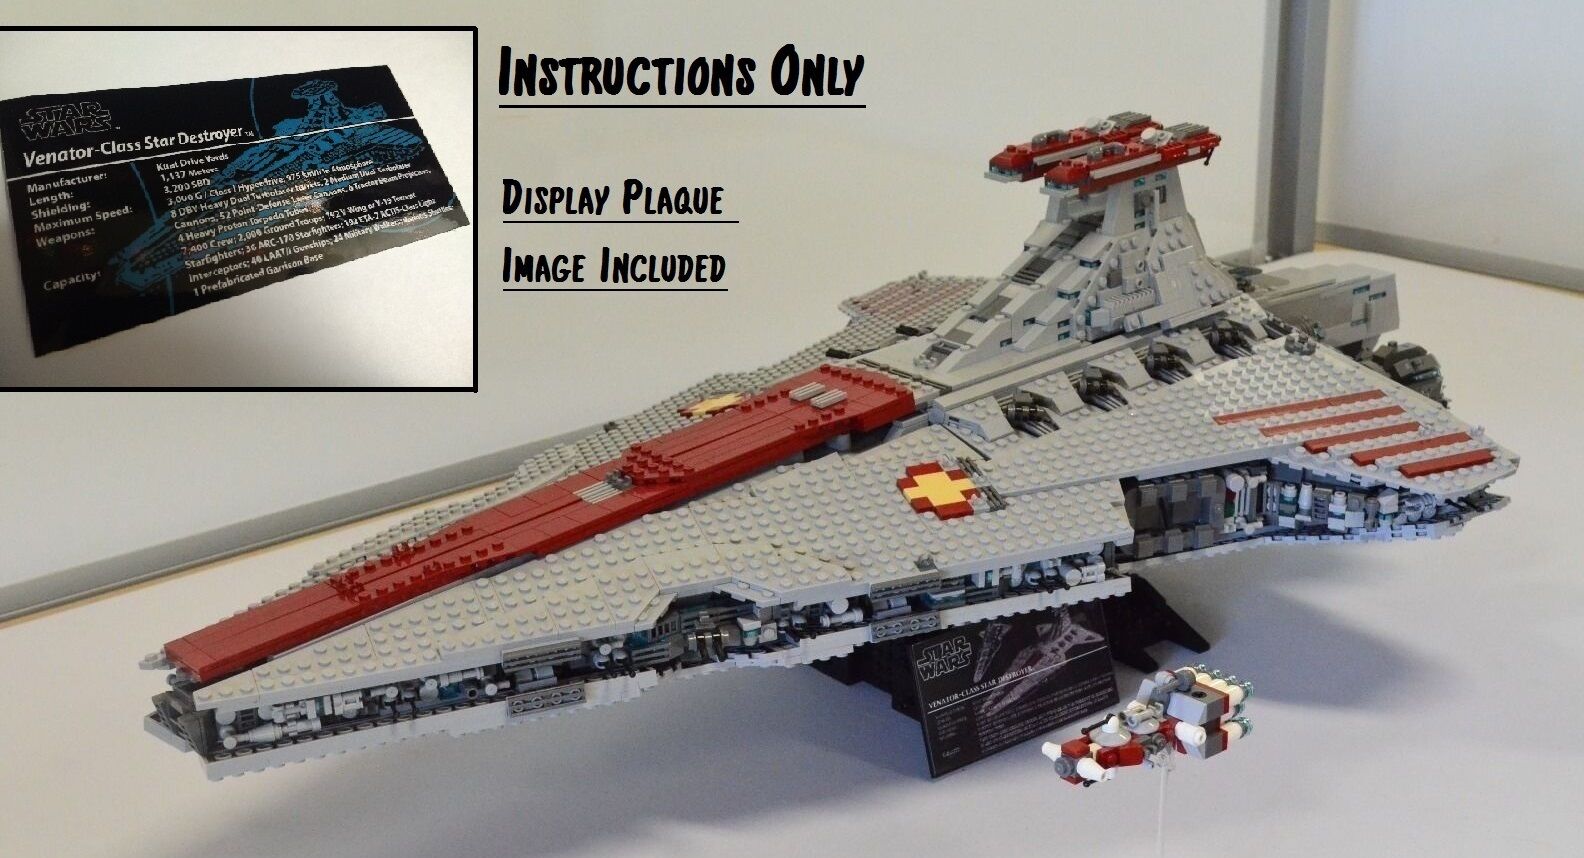 Lego venator class star destroyer instructions